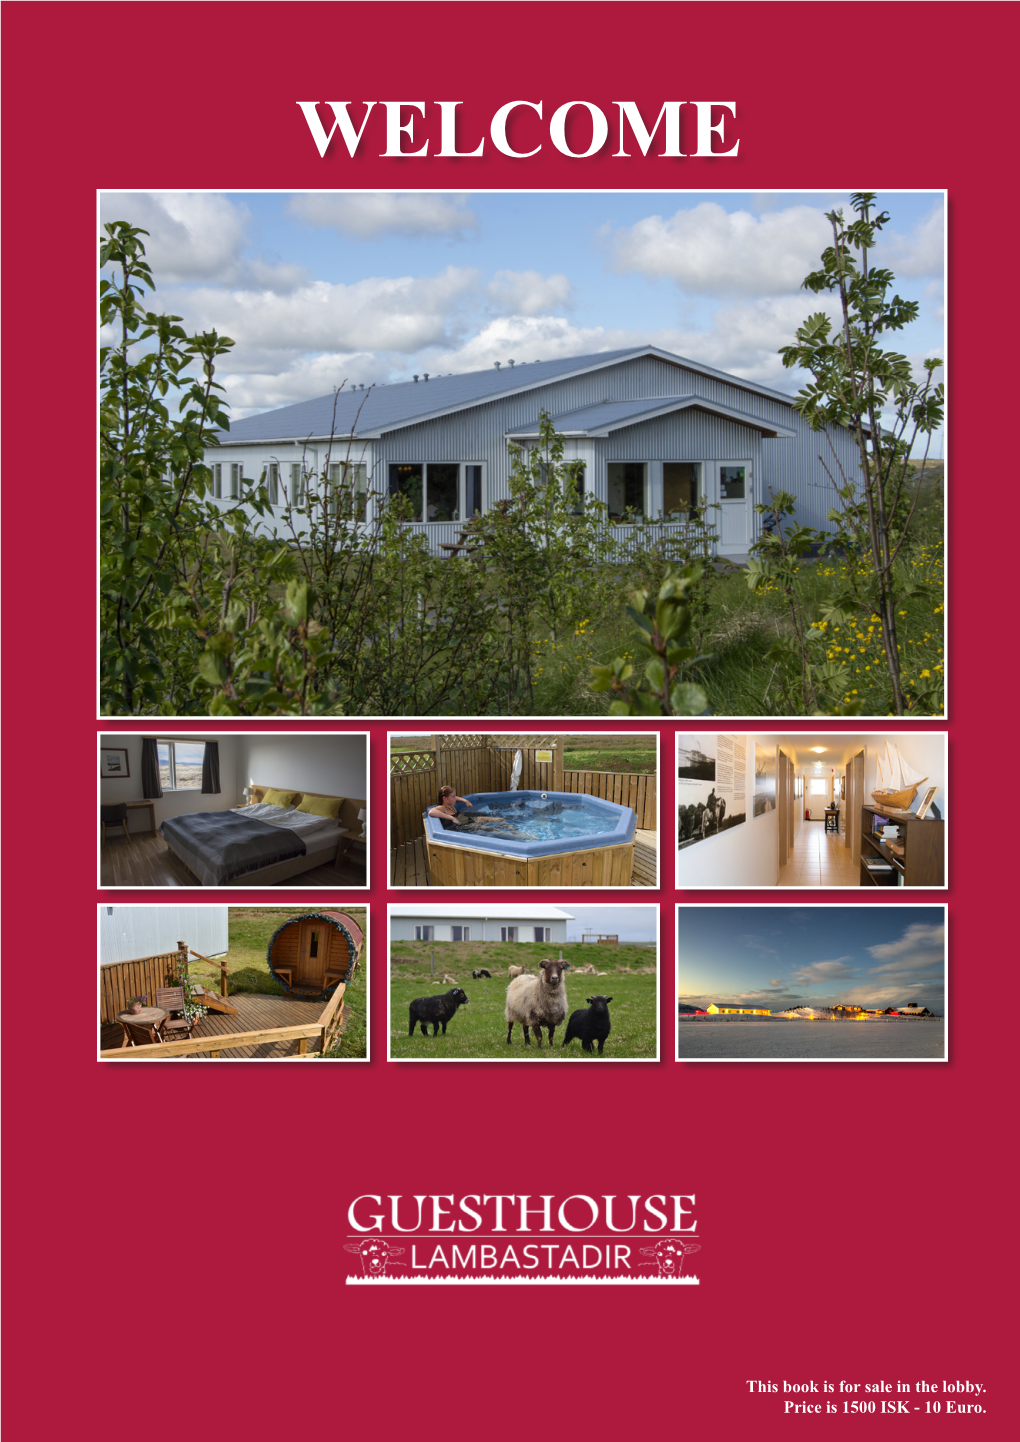 Guesthouse Lambastadir Welcome Book